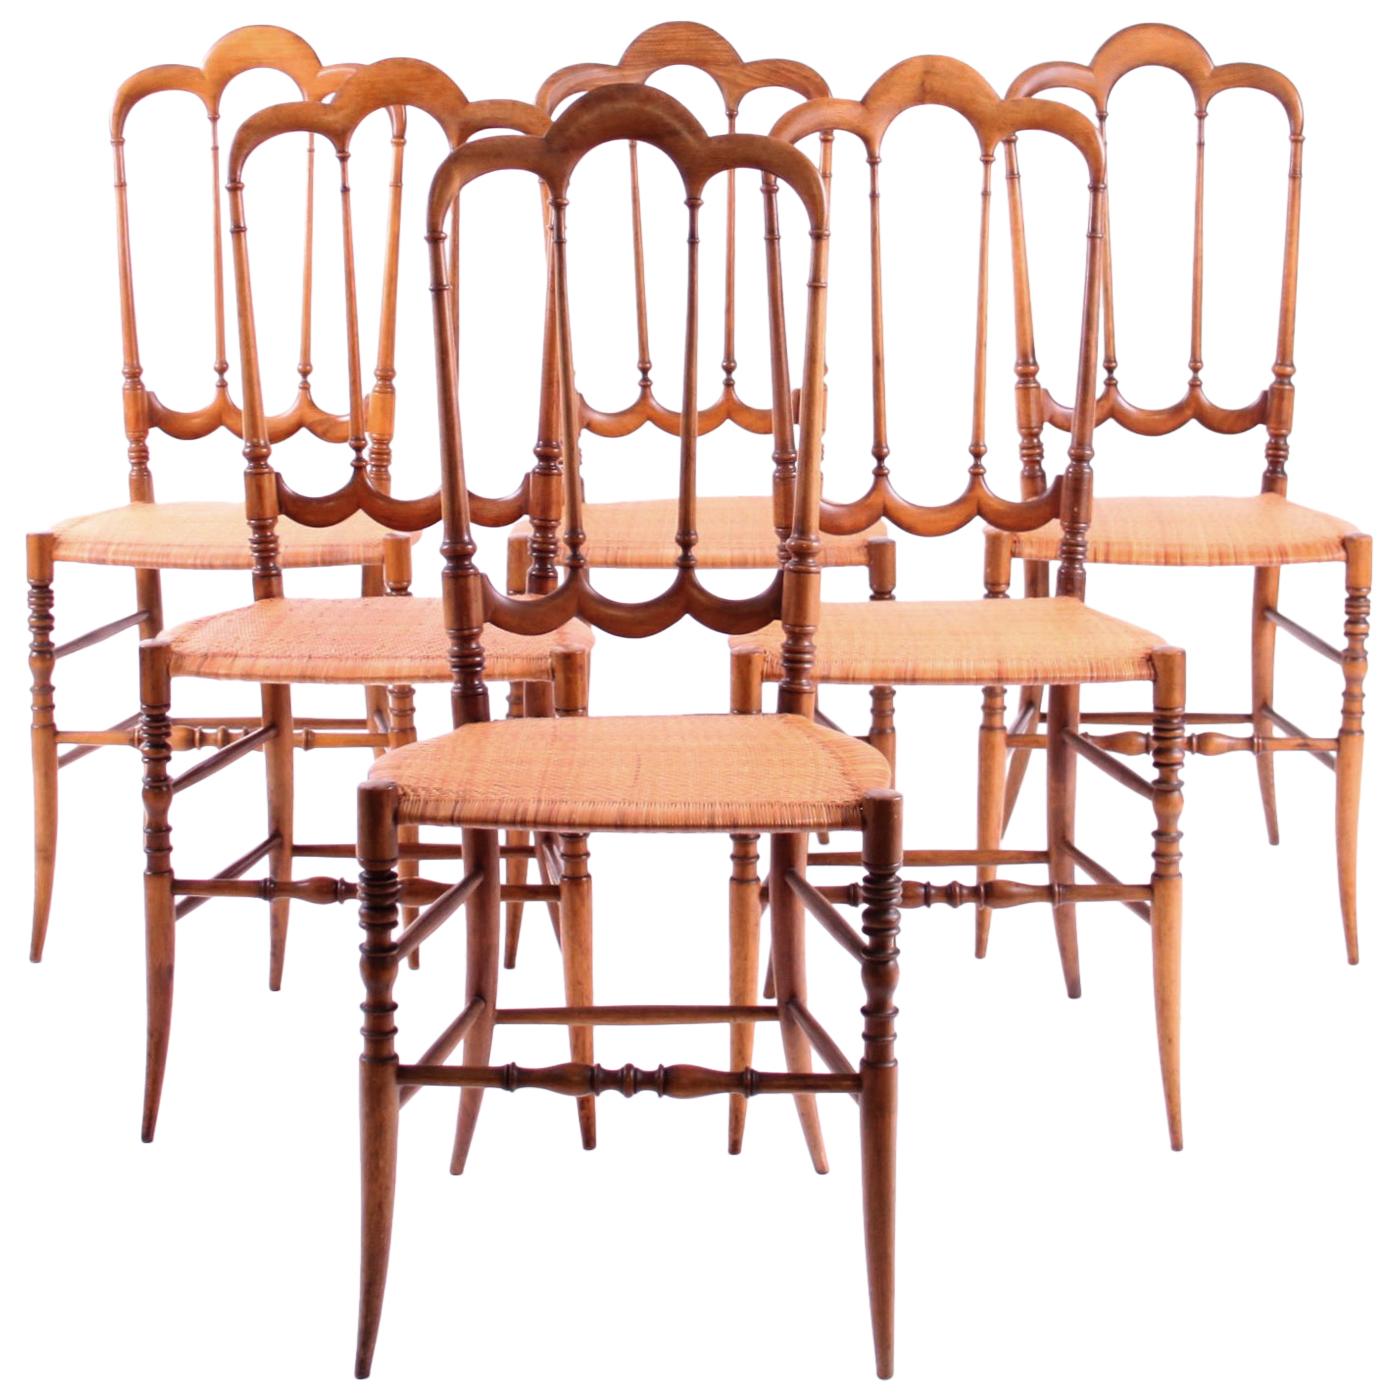 Set of Six Vintage Chiavari "Tre Archi" Chairs, Italy